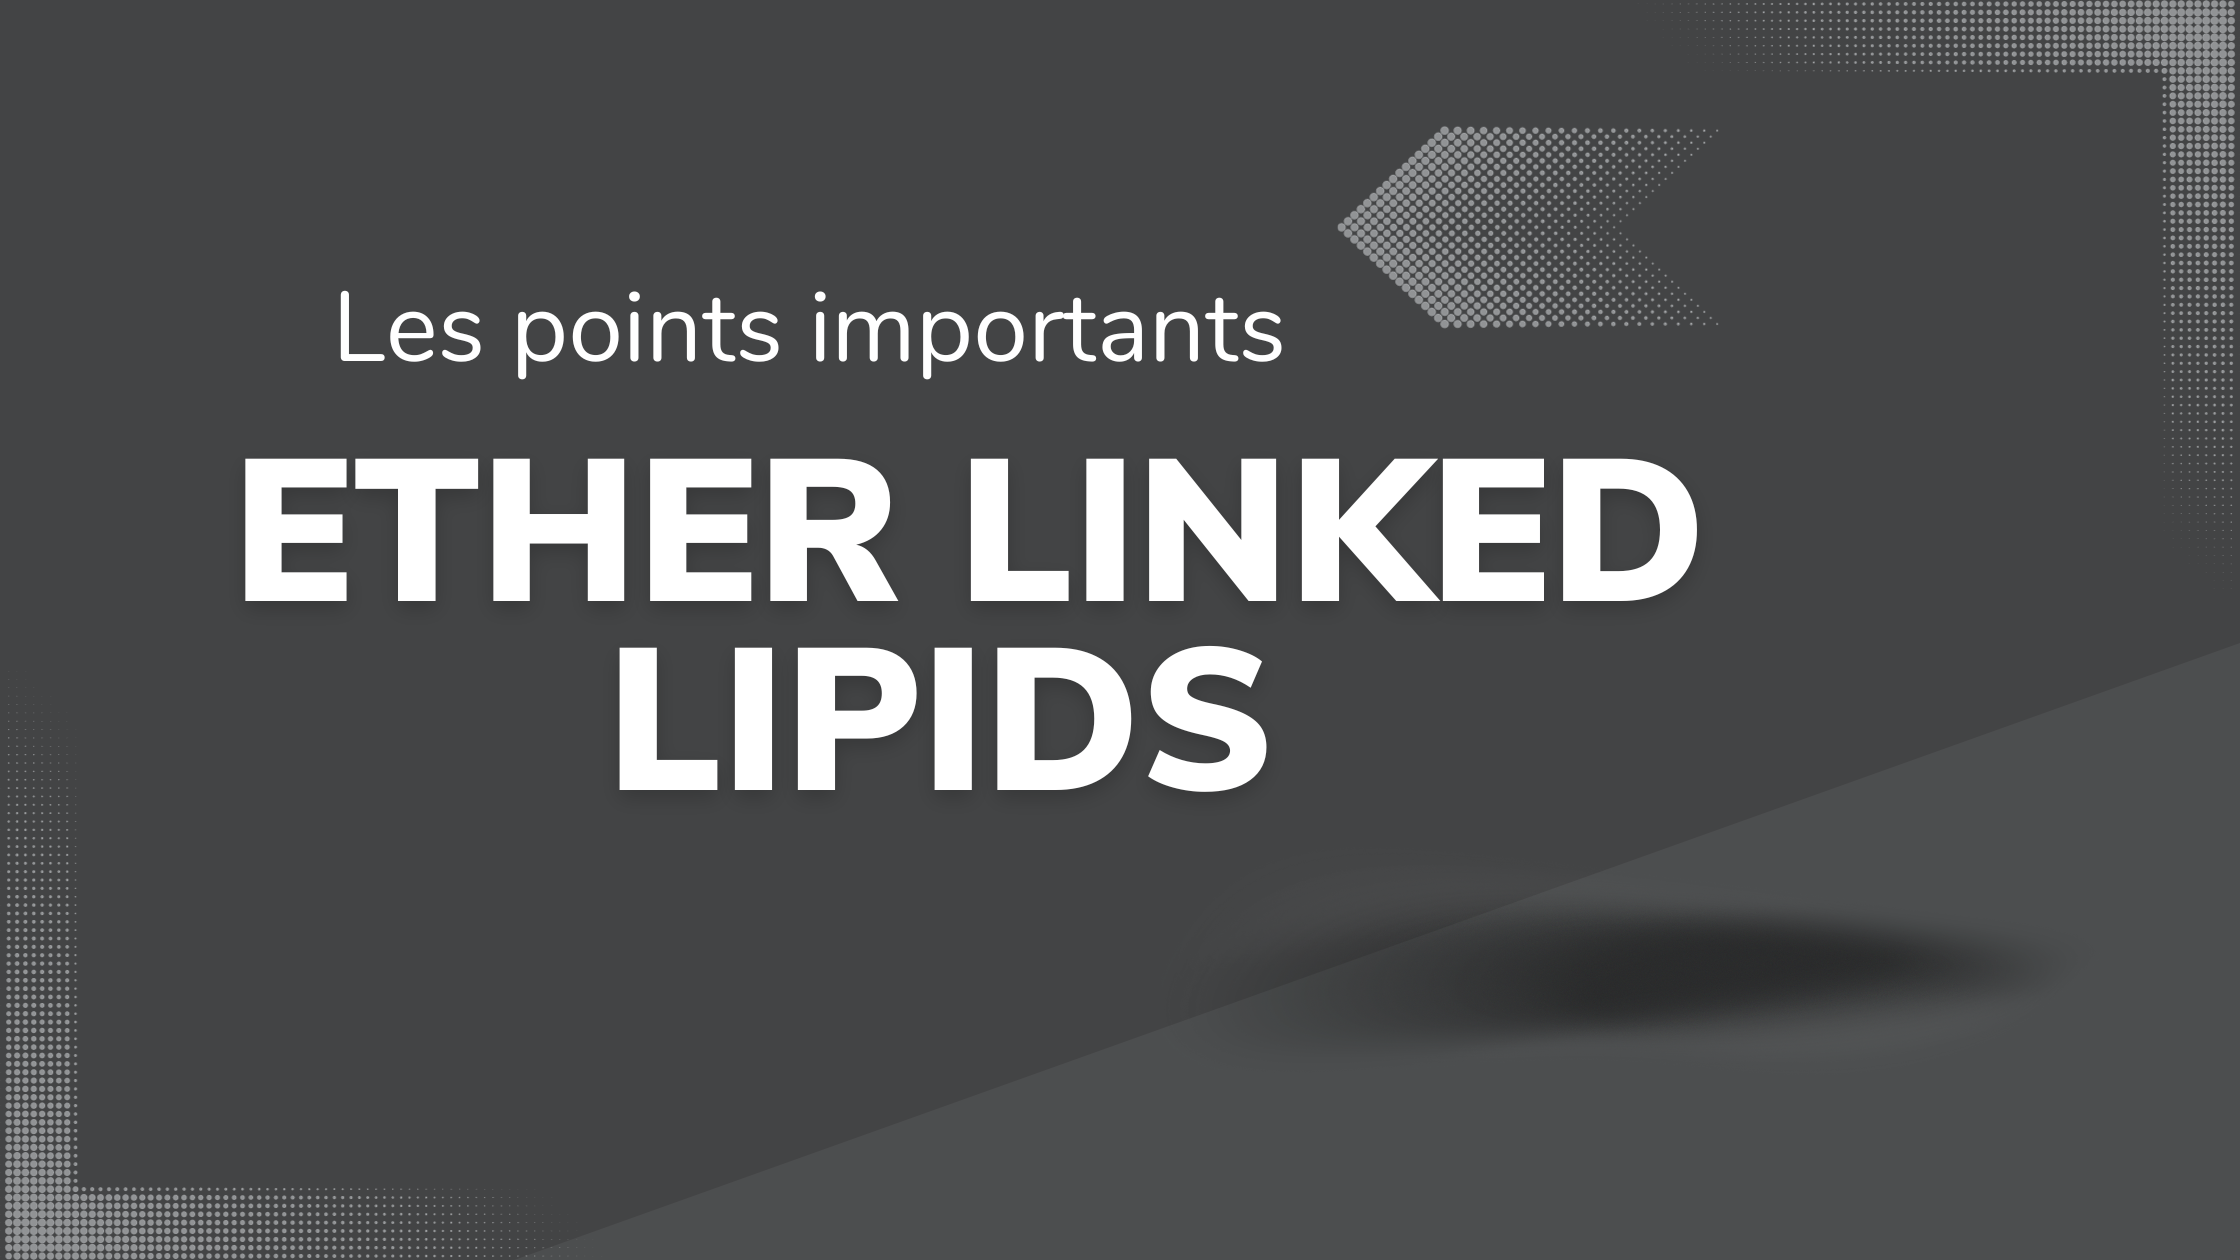 ether linked lipids | Les points importants